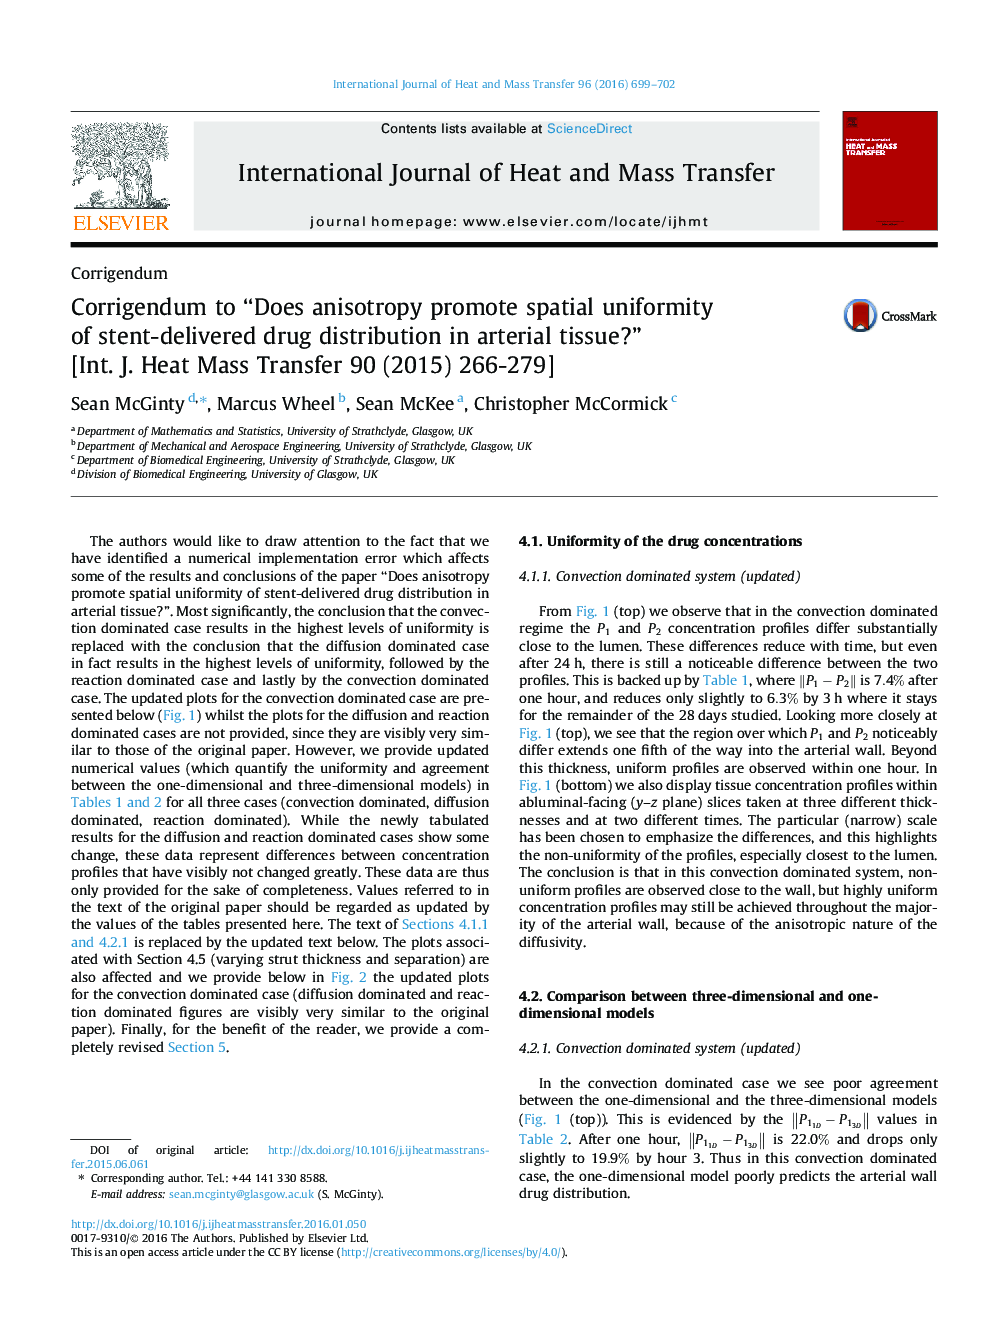 Corrigendum to “Does anisotropy promote spatial uniformity of stent-delivered drug distribution in arterial tissue?” [Int. J. Heat Mass Transfer 90 (2015) 266-279]